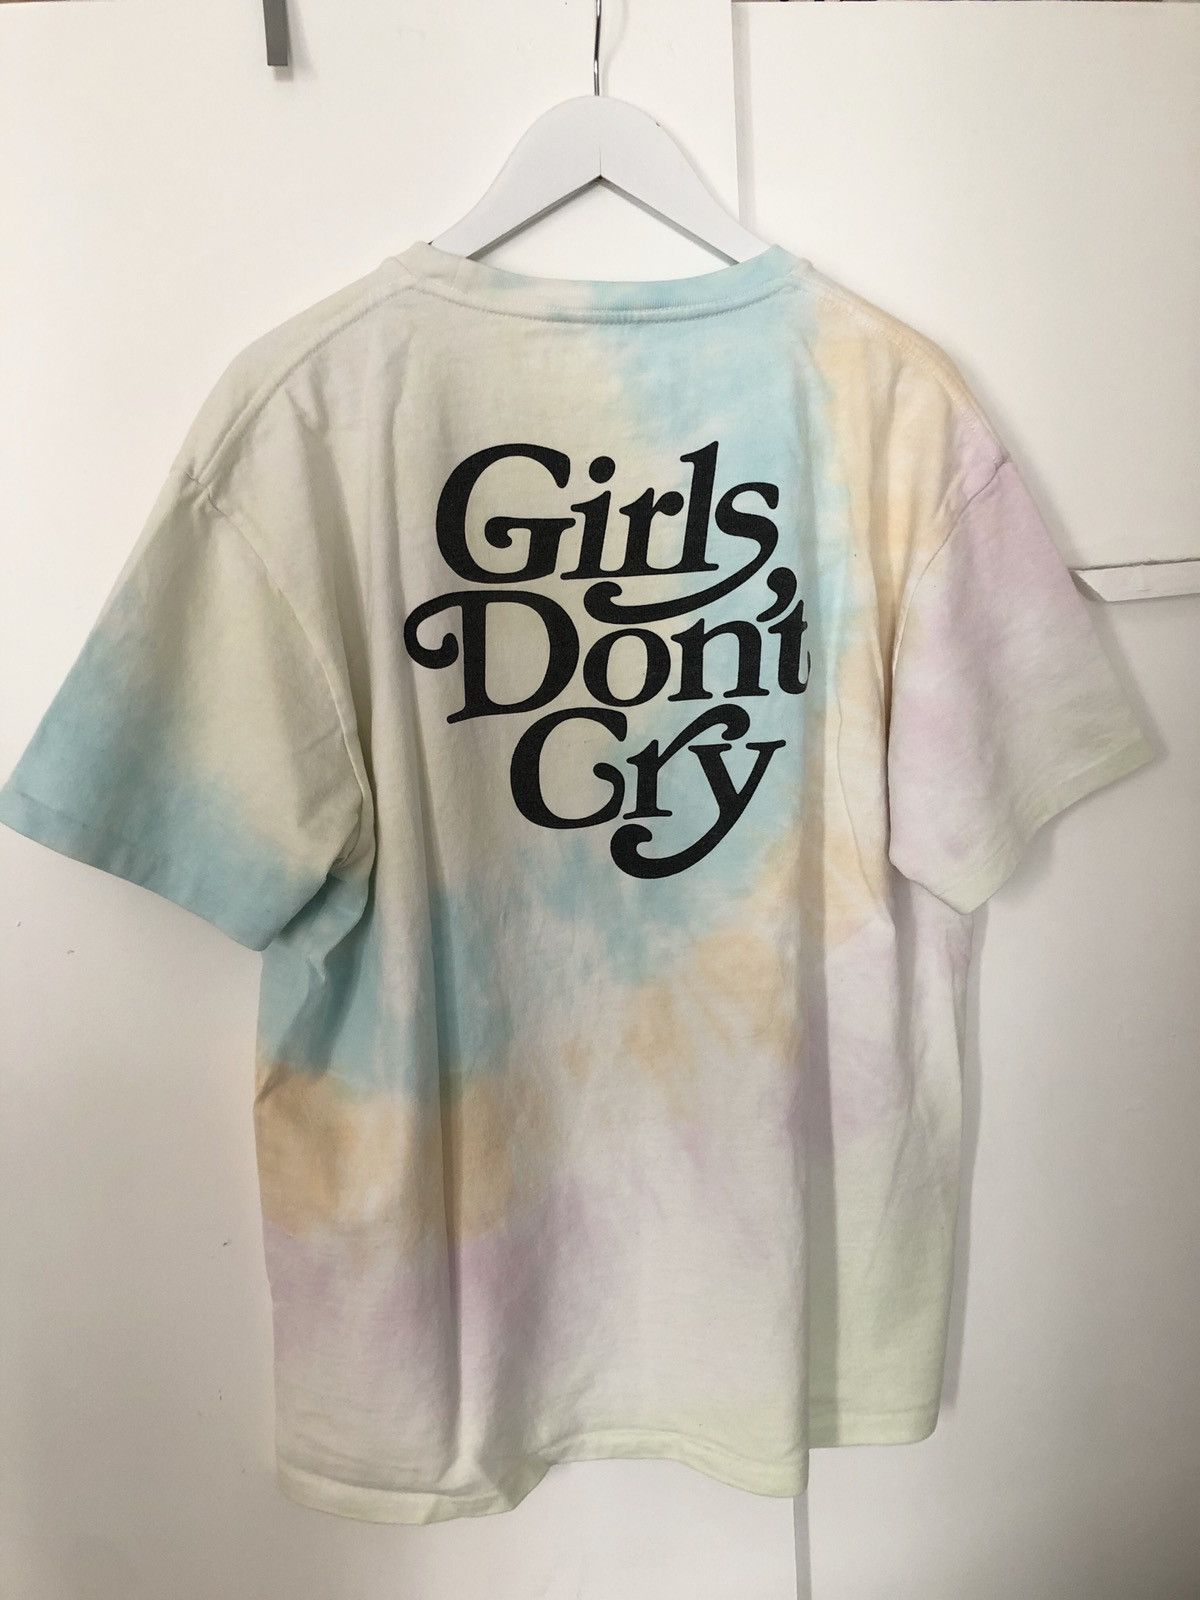 READYMADE Readymade x Girls don't cry Tie Dye tee | Grailed